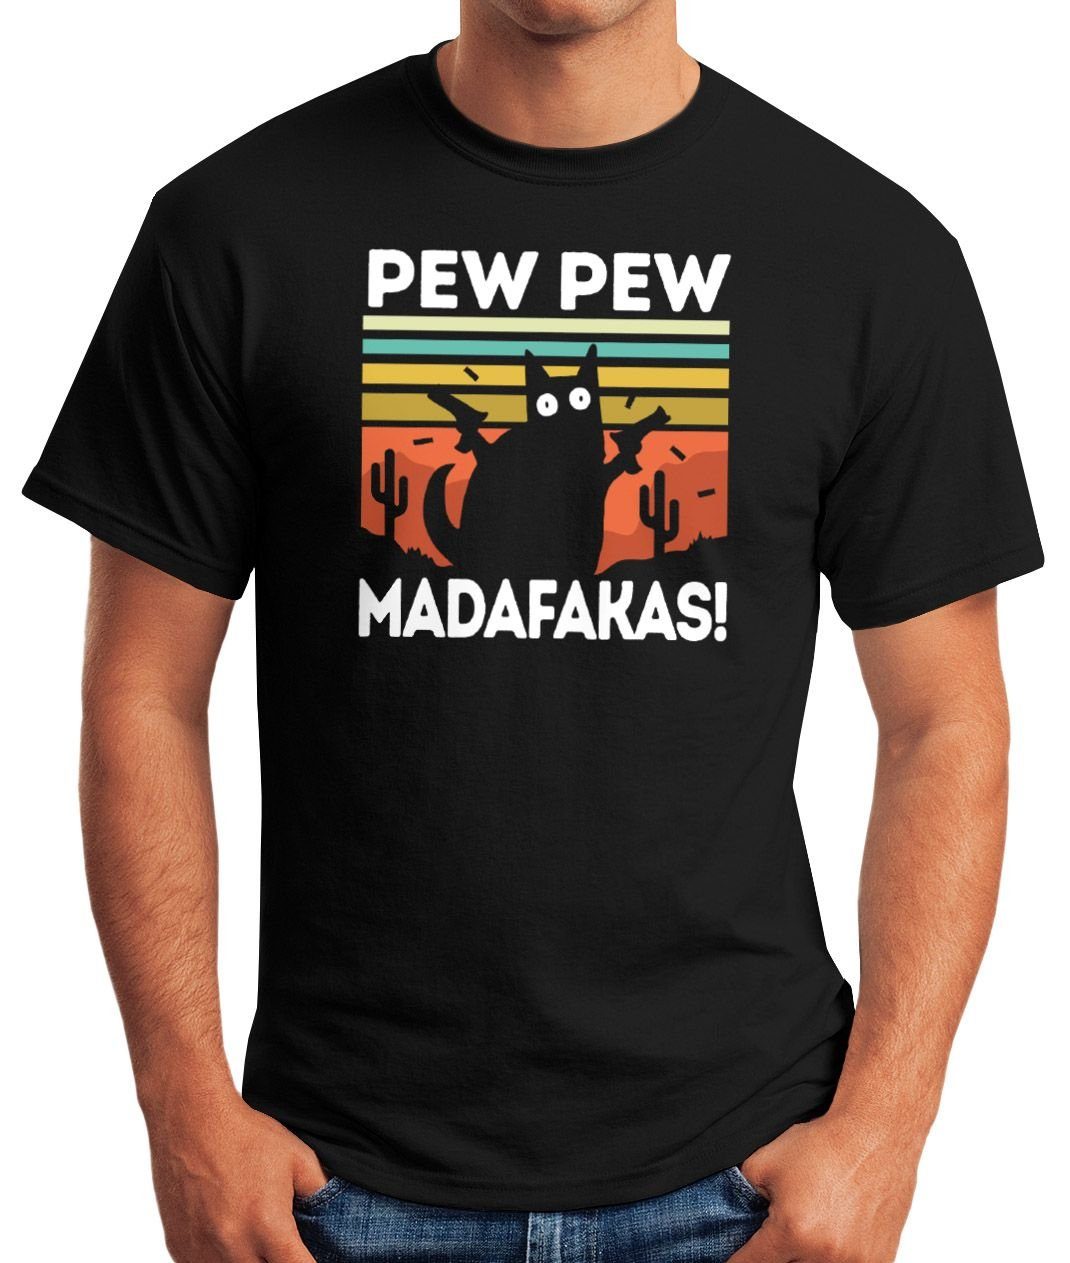 Print-Shirt Moonworks® Madafakas! Pew Meme lustig mit T-Shirt Fun-Shirt Pew Katze schwarze Spruch Herren MoonWorks Print